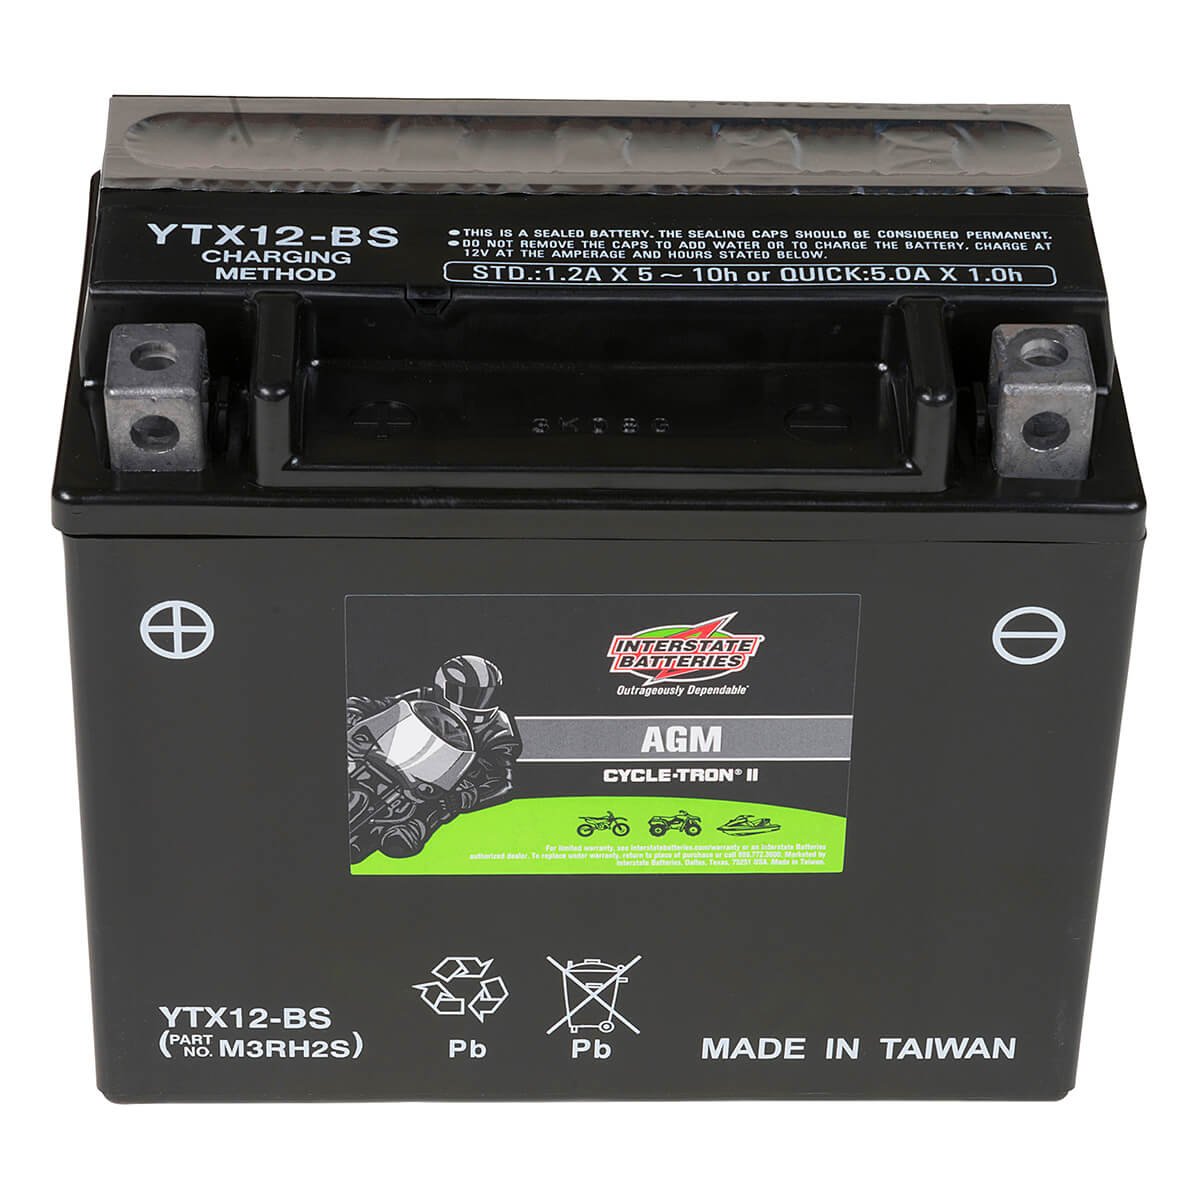 Cycletron AGM 12 Volt Battery, Non Spillable - CYTX12-BS